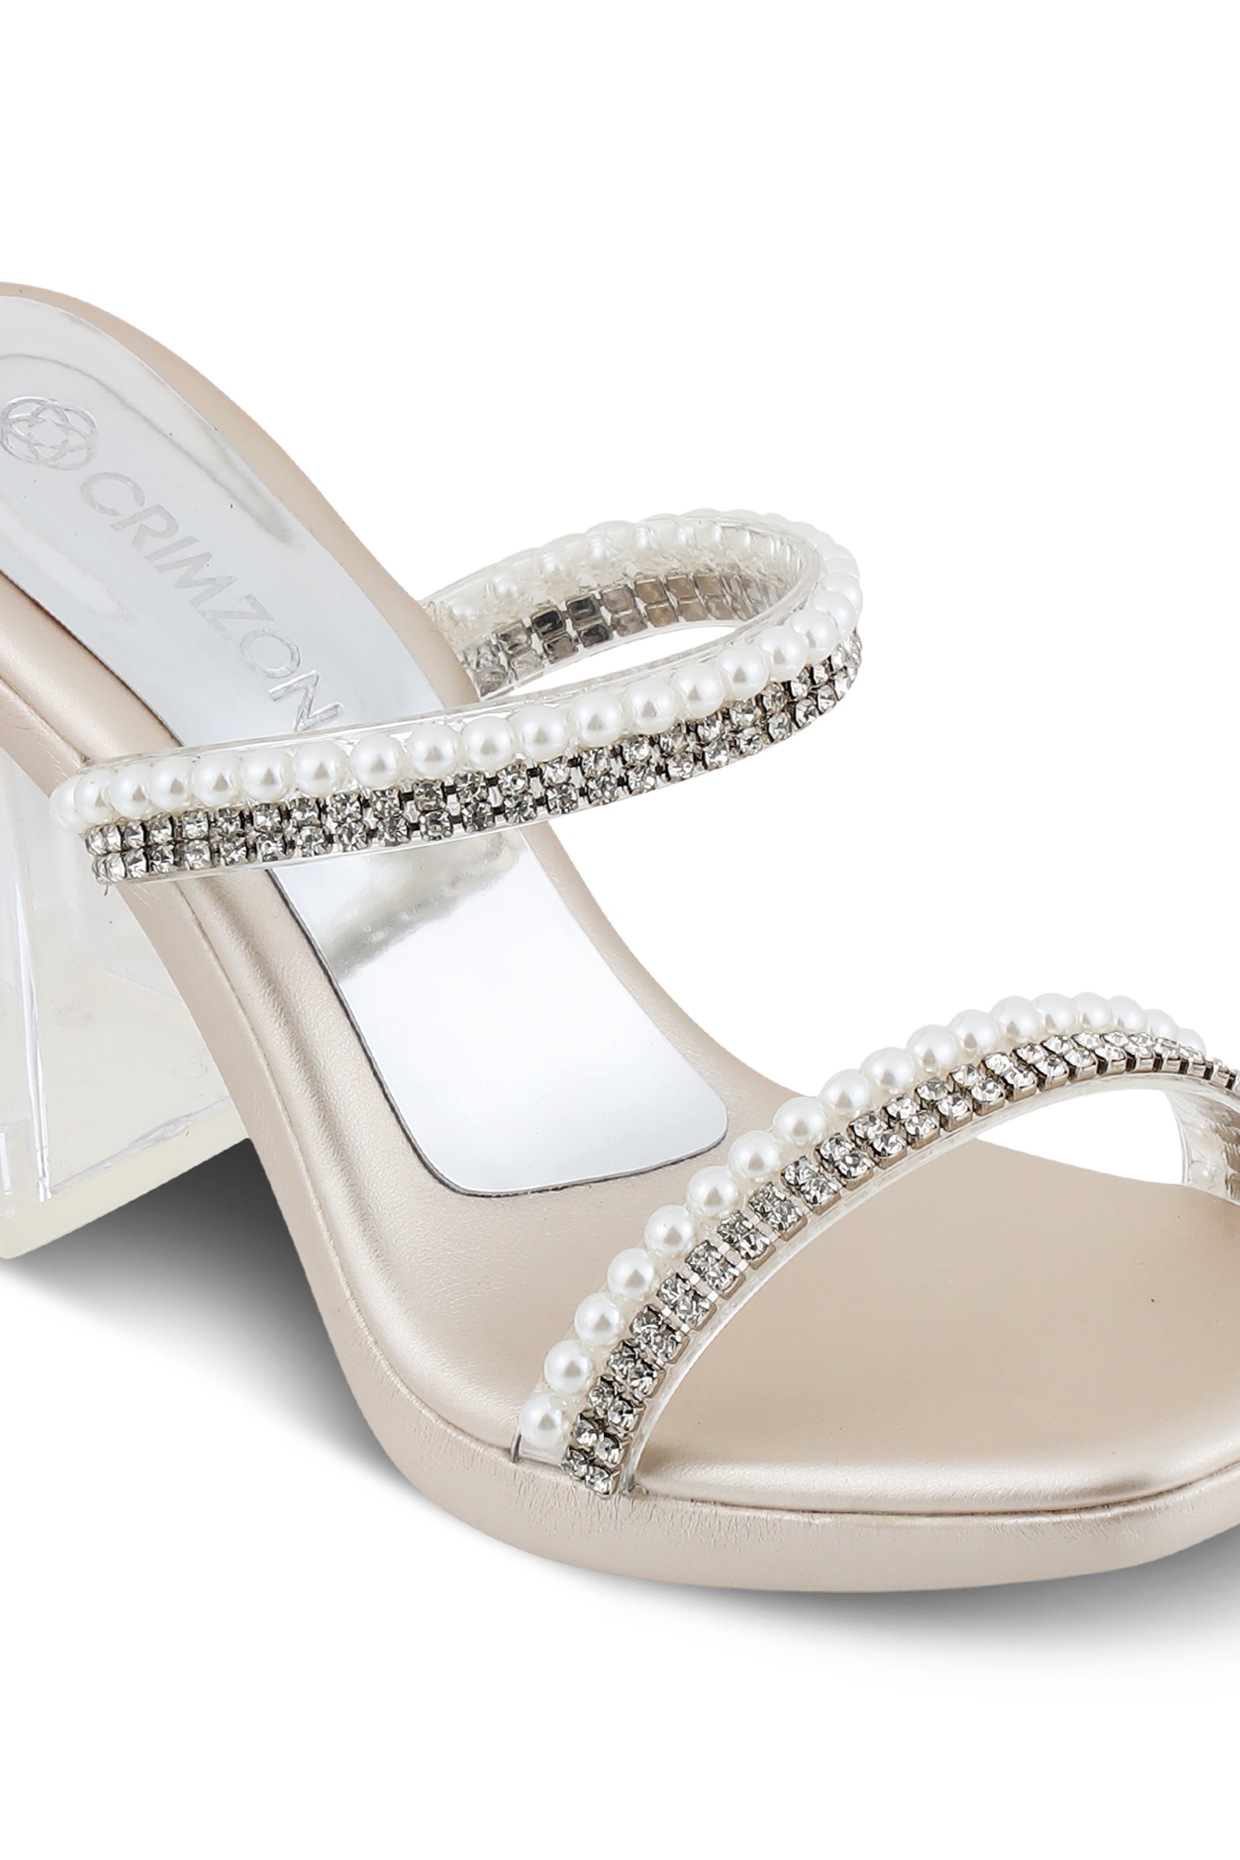 Womens Rhinestone Block heel Sliders Slip on Mules Sandals Sparkly Party  size | eBay